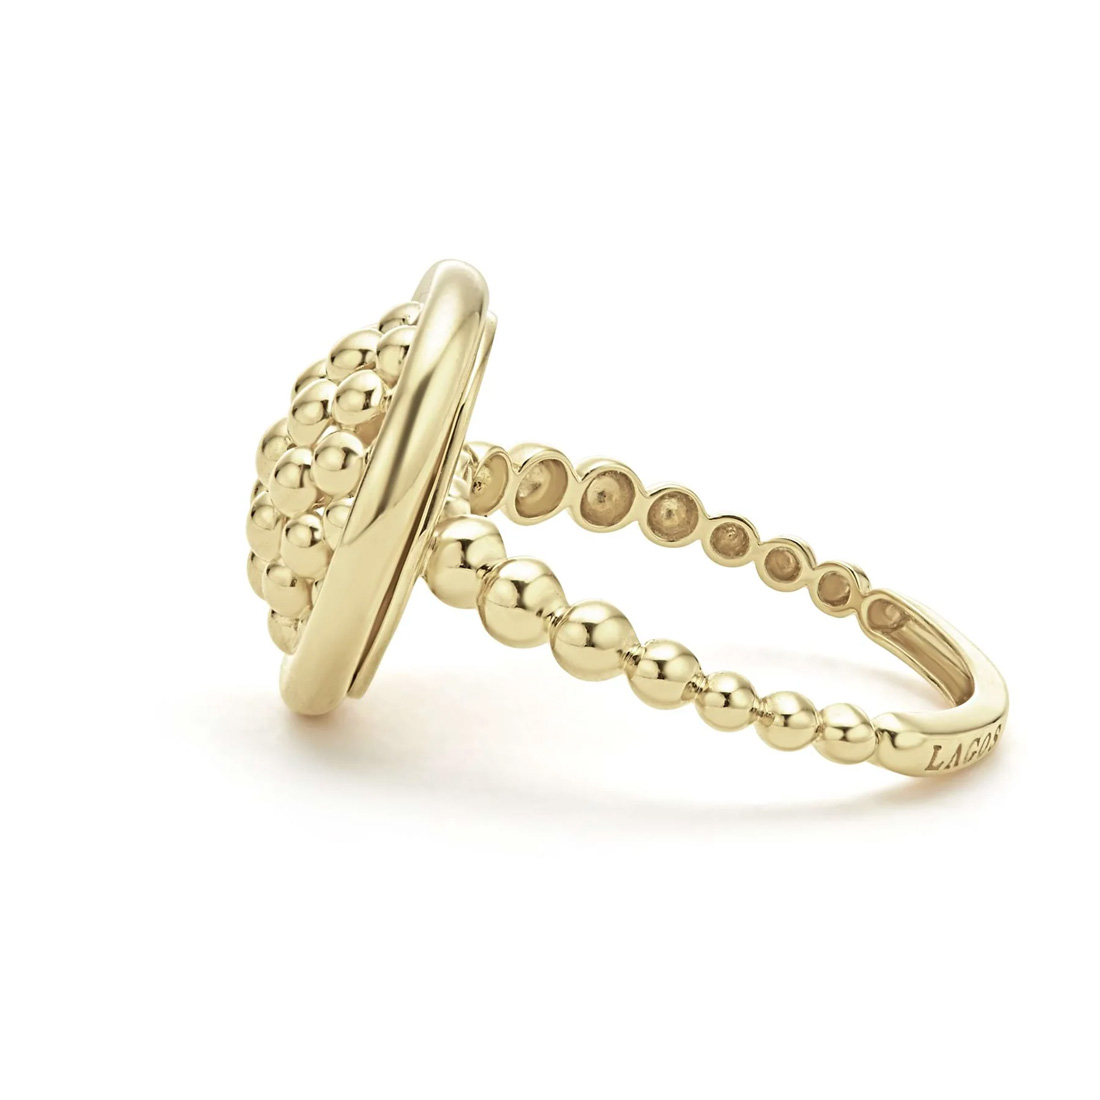 LAGOS "Meridian" 18kt Yellow Gold Caviar Ring, Size 7